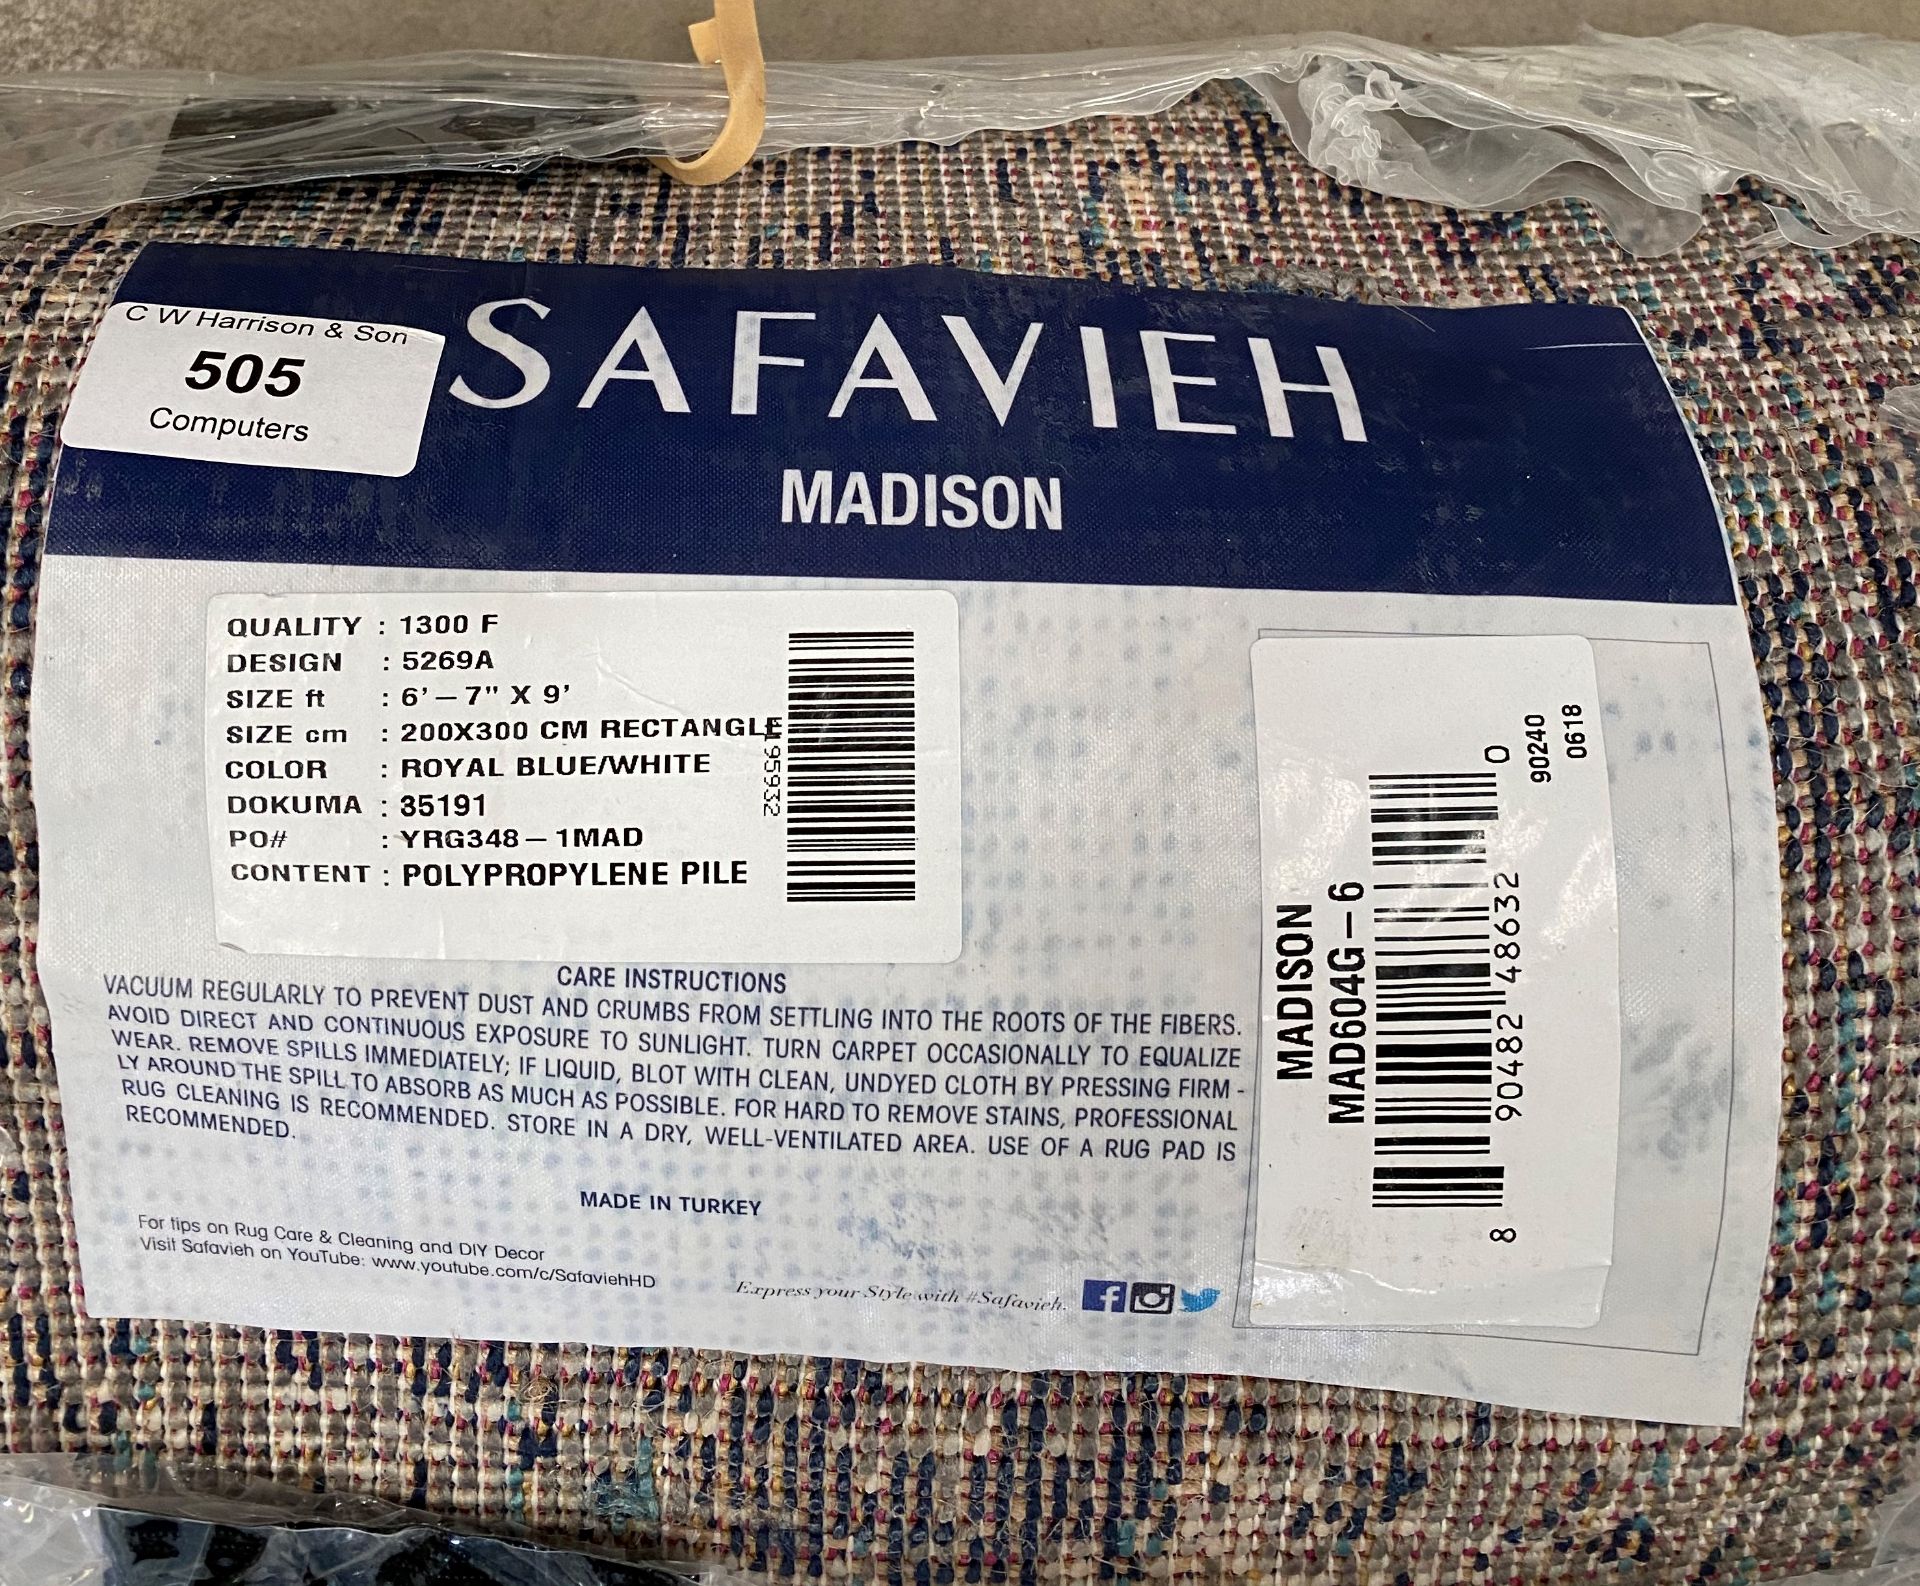 A Safavieh Madison Royal Blue/White rug - 200cm x 300cm - Image 2 of 4